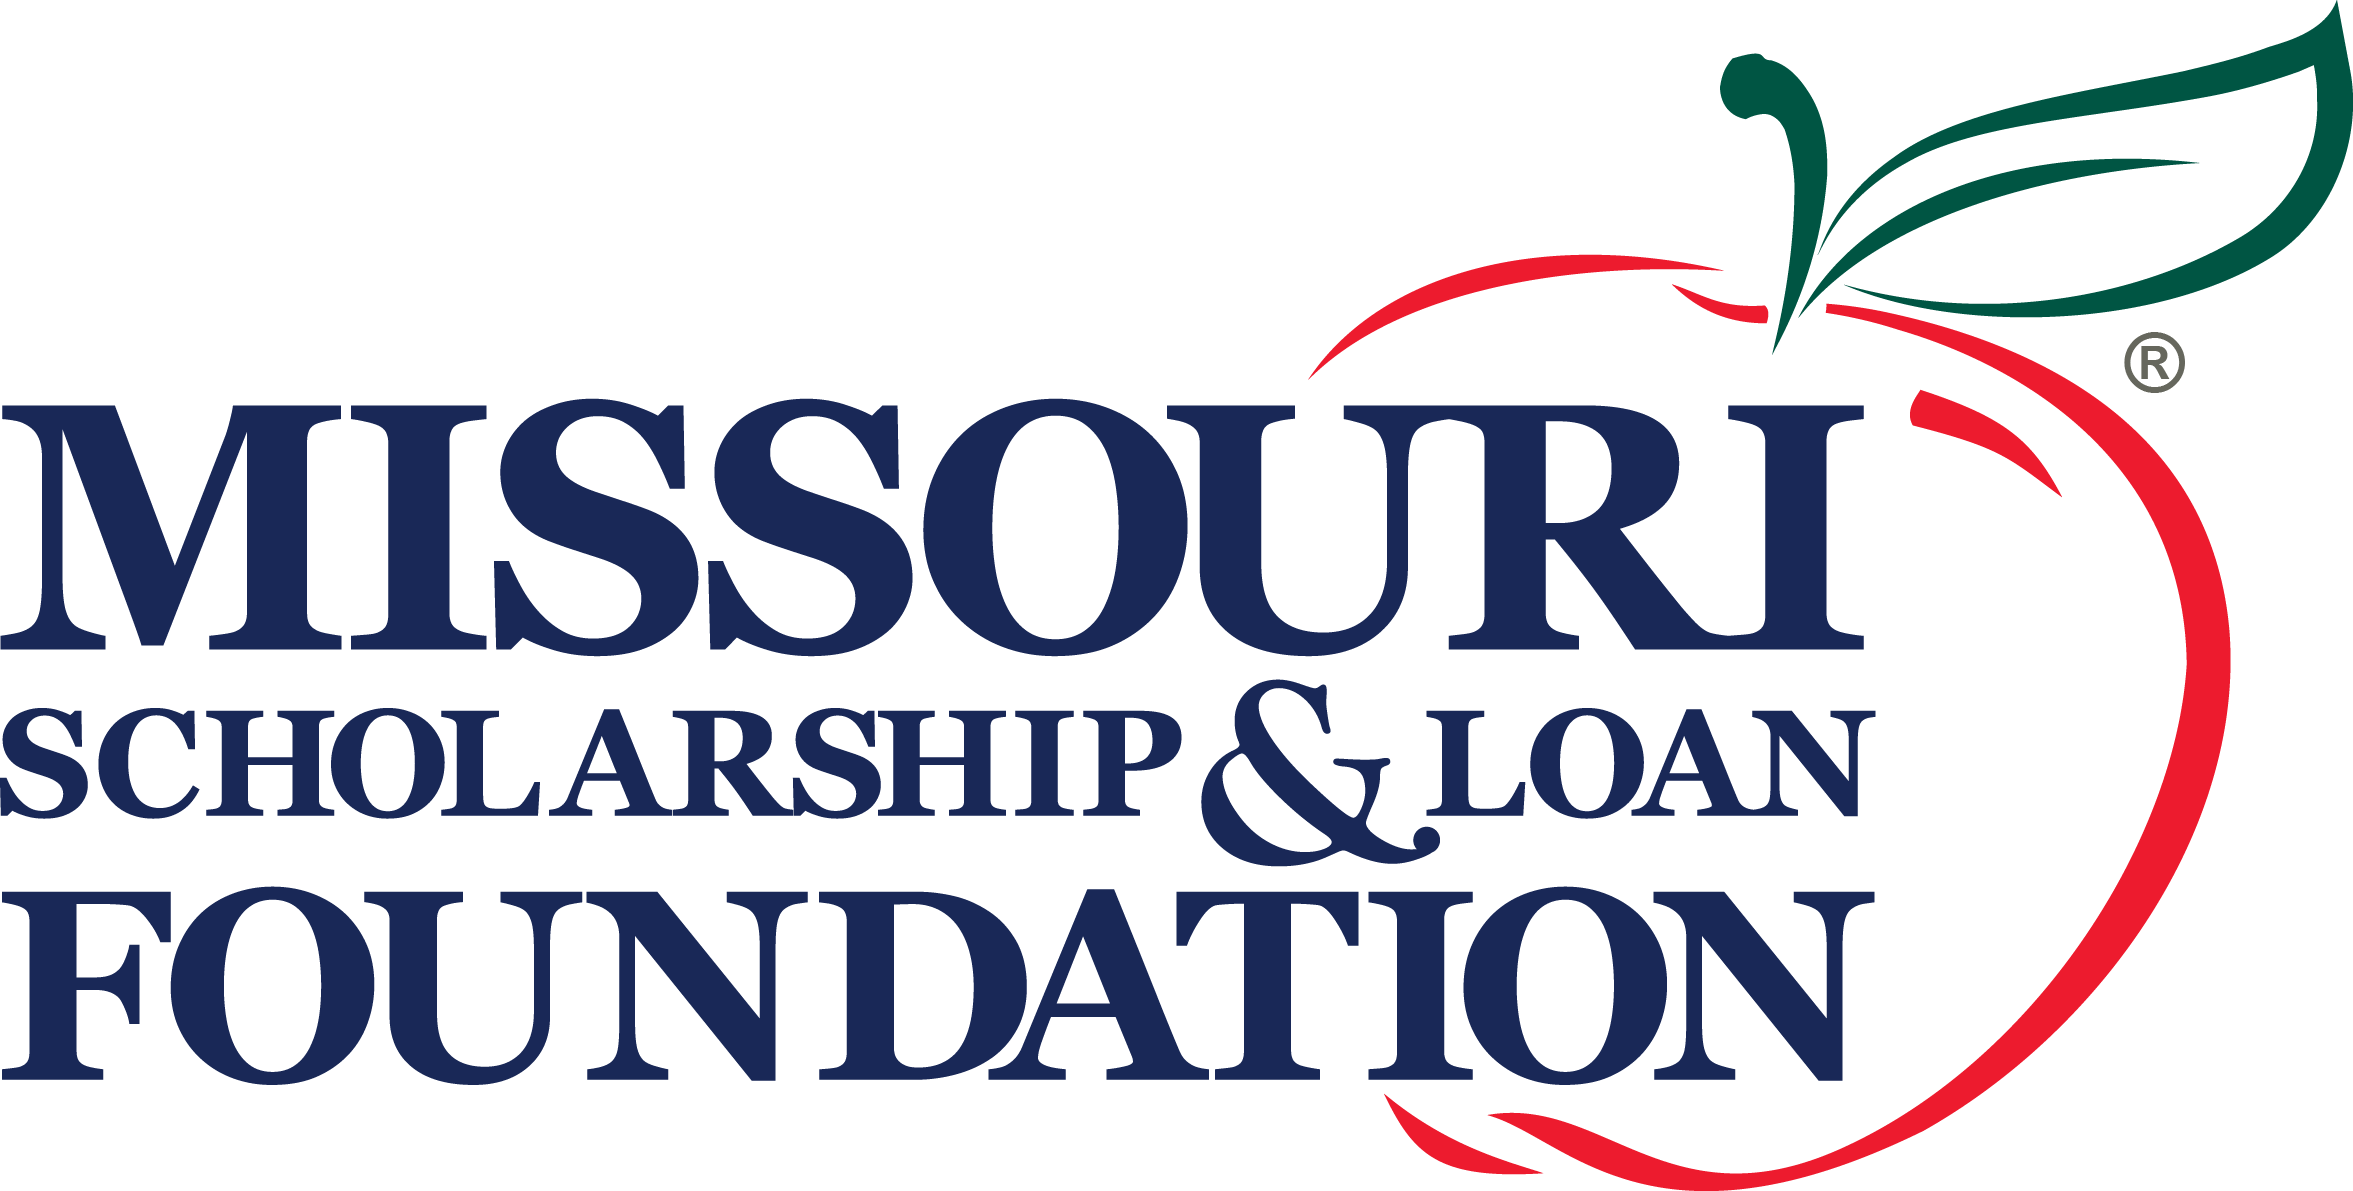 Missouri Scholarship & Loan Foundation